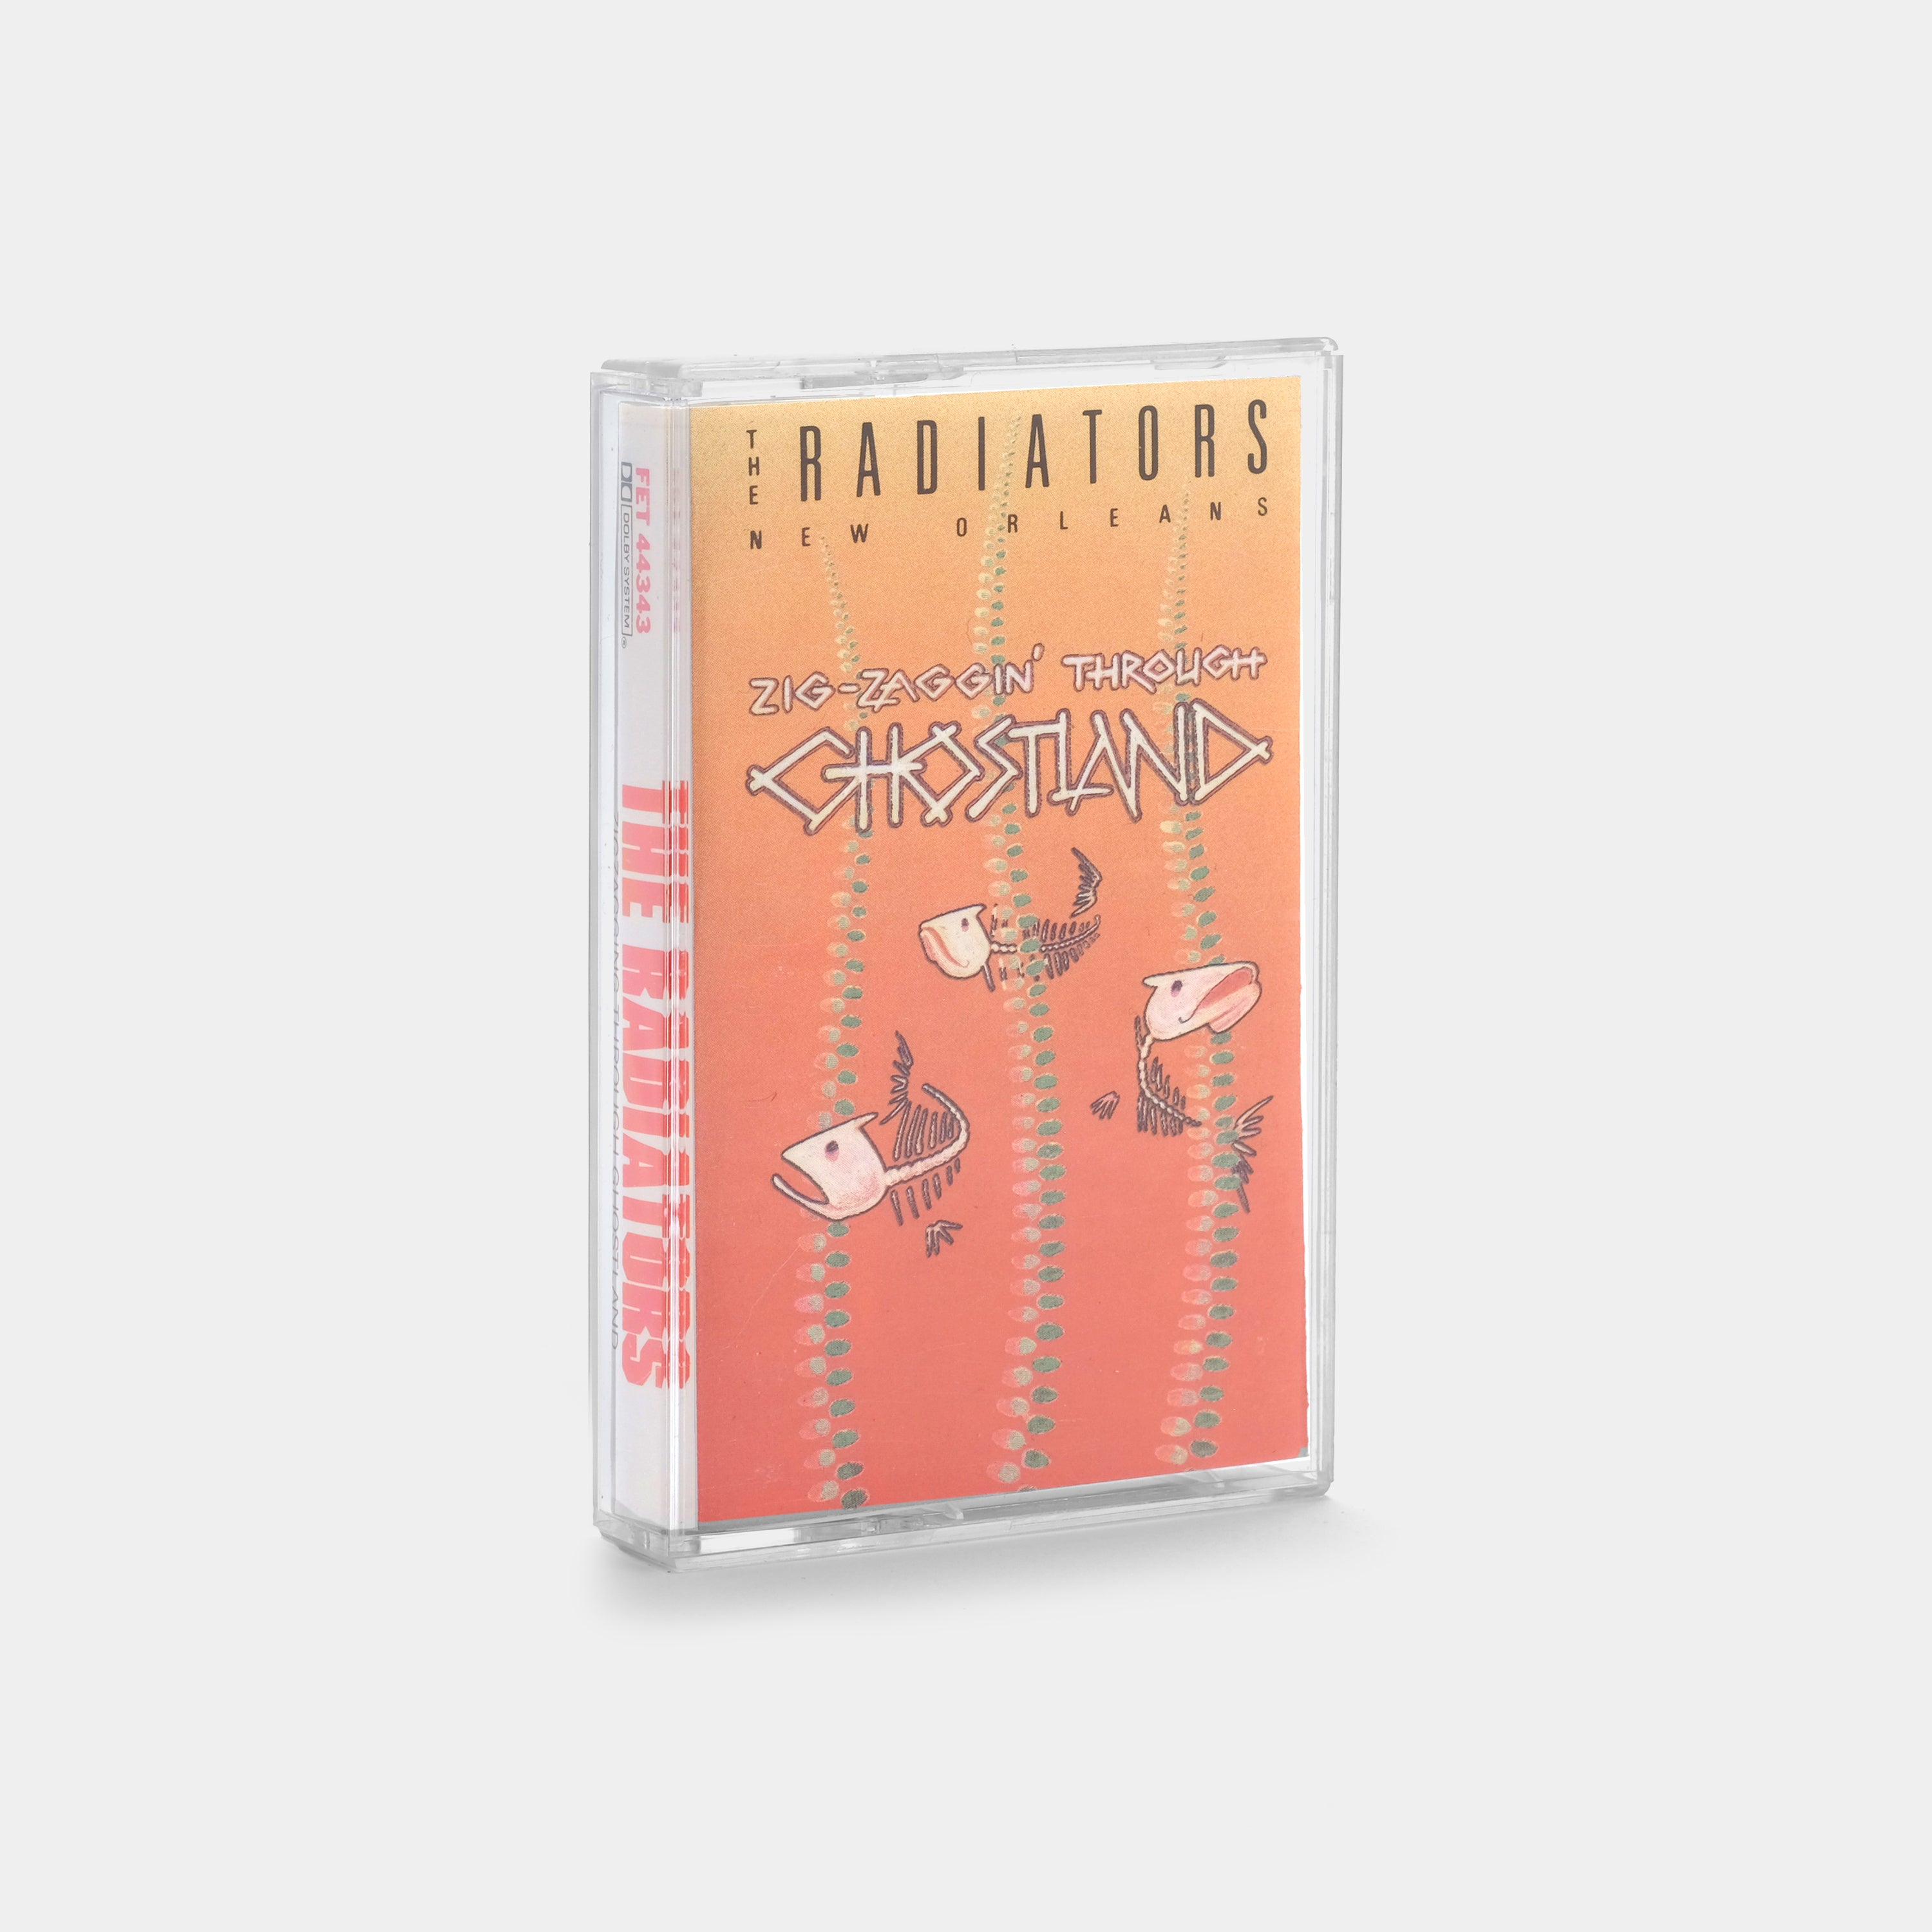 The New Orleans Radiators - Zig-Zaggin' Through Ghostland Cassette Tape